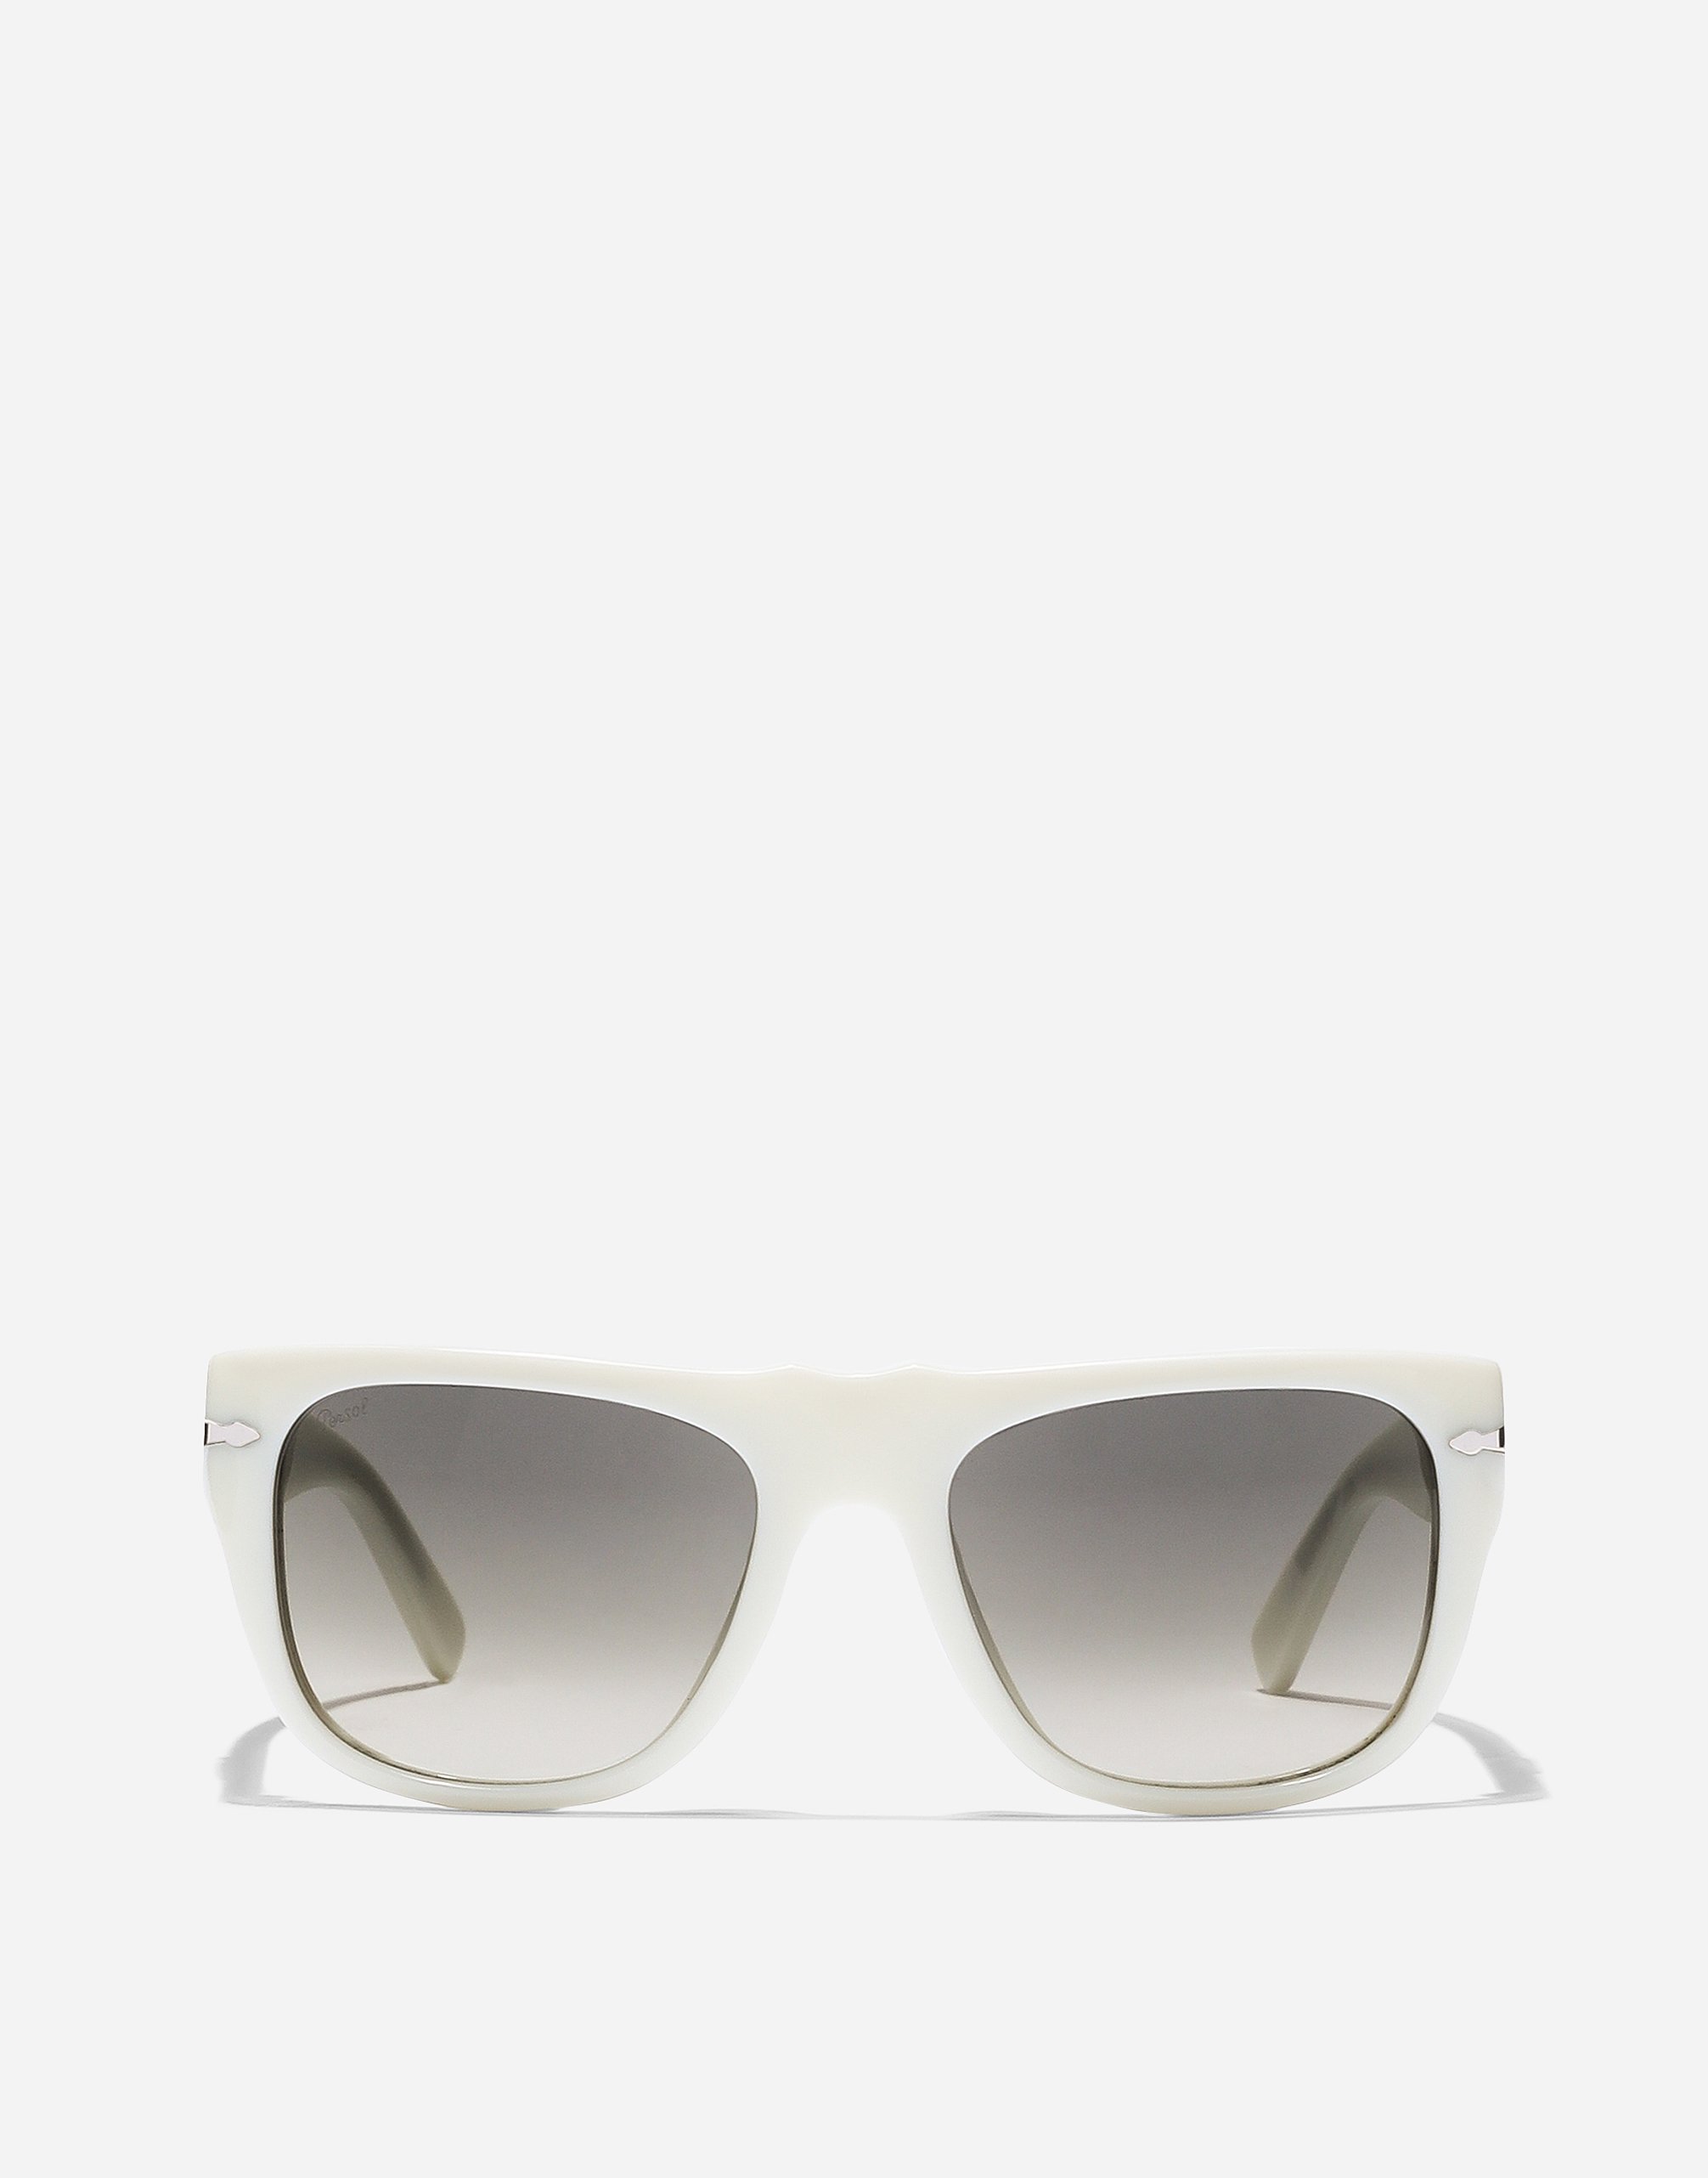 Dolce&Gabbana x Persol sunglasses in ivory